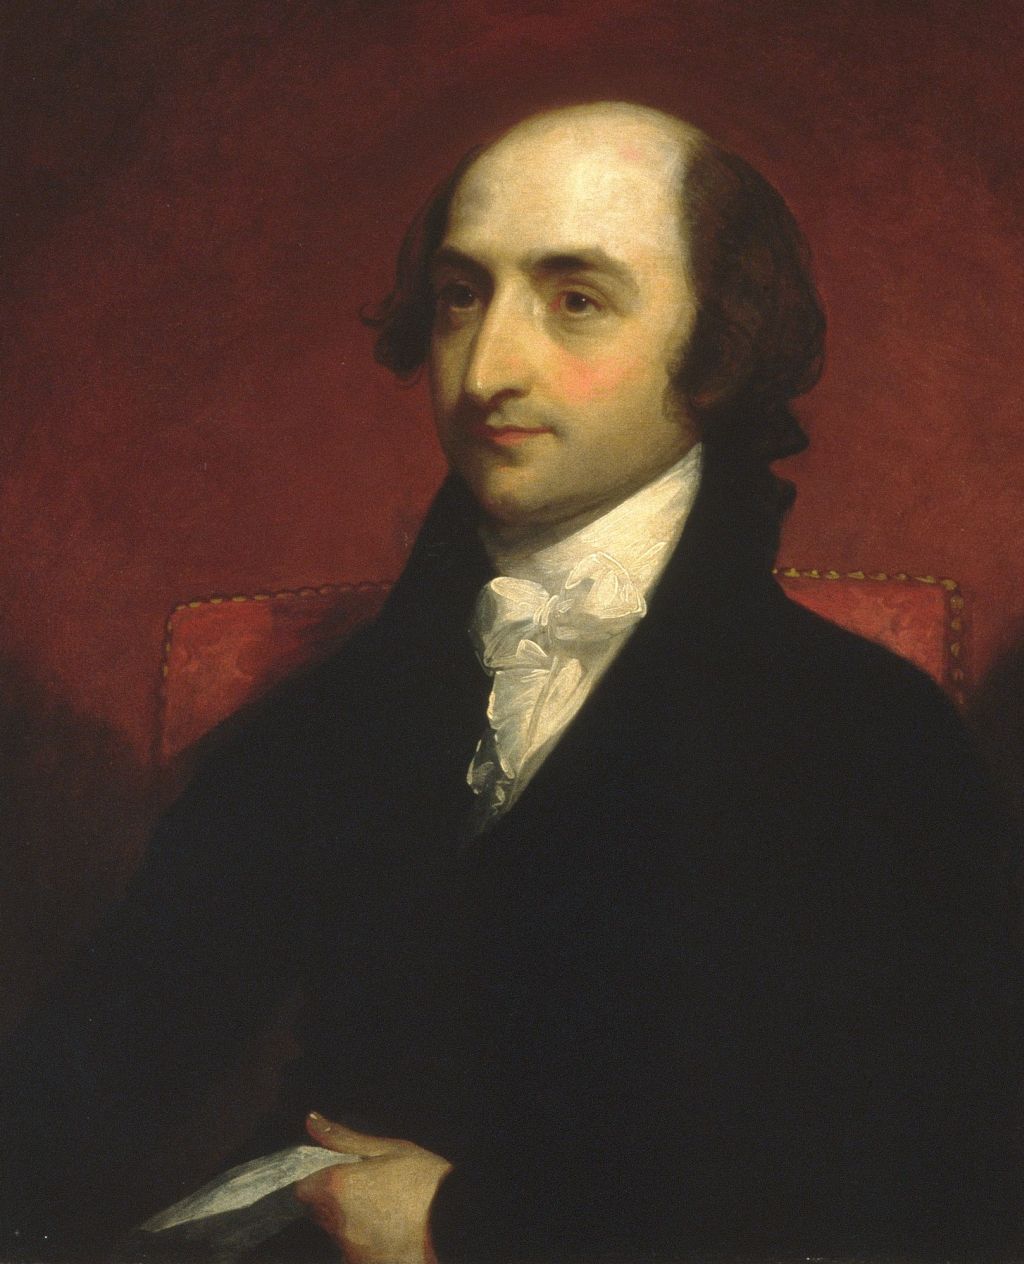 Albert Gallatin, Secretary of the Treasury in the Madison Administration